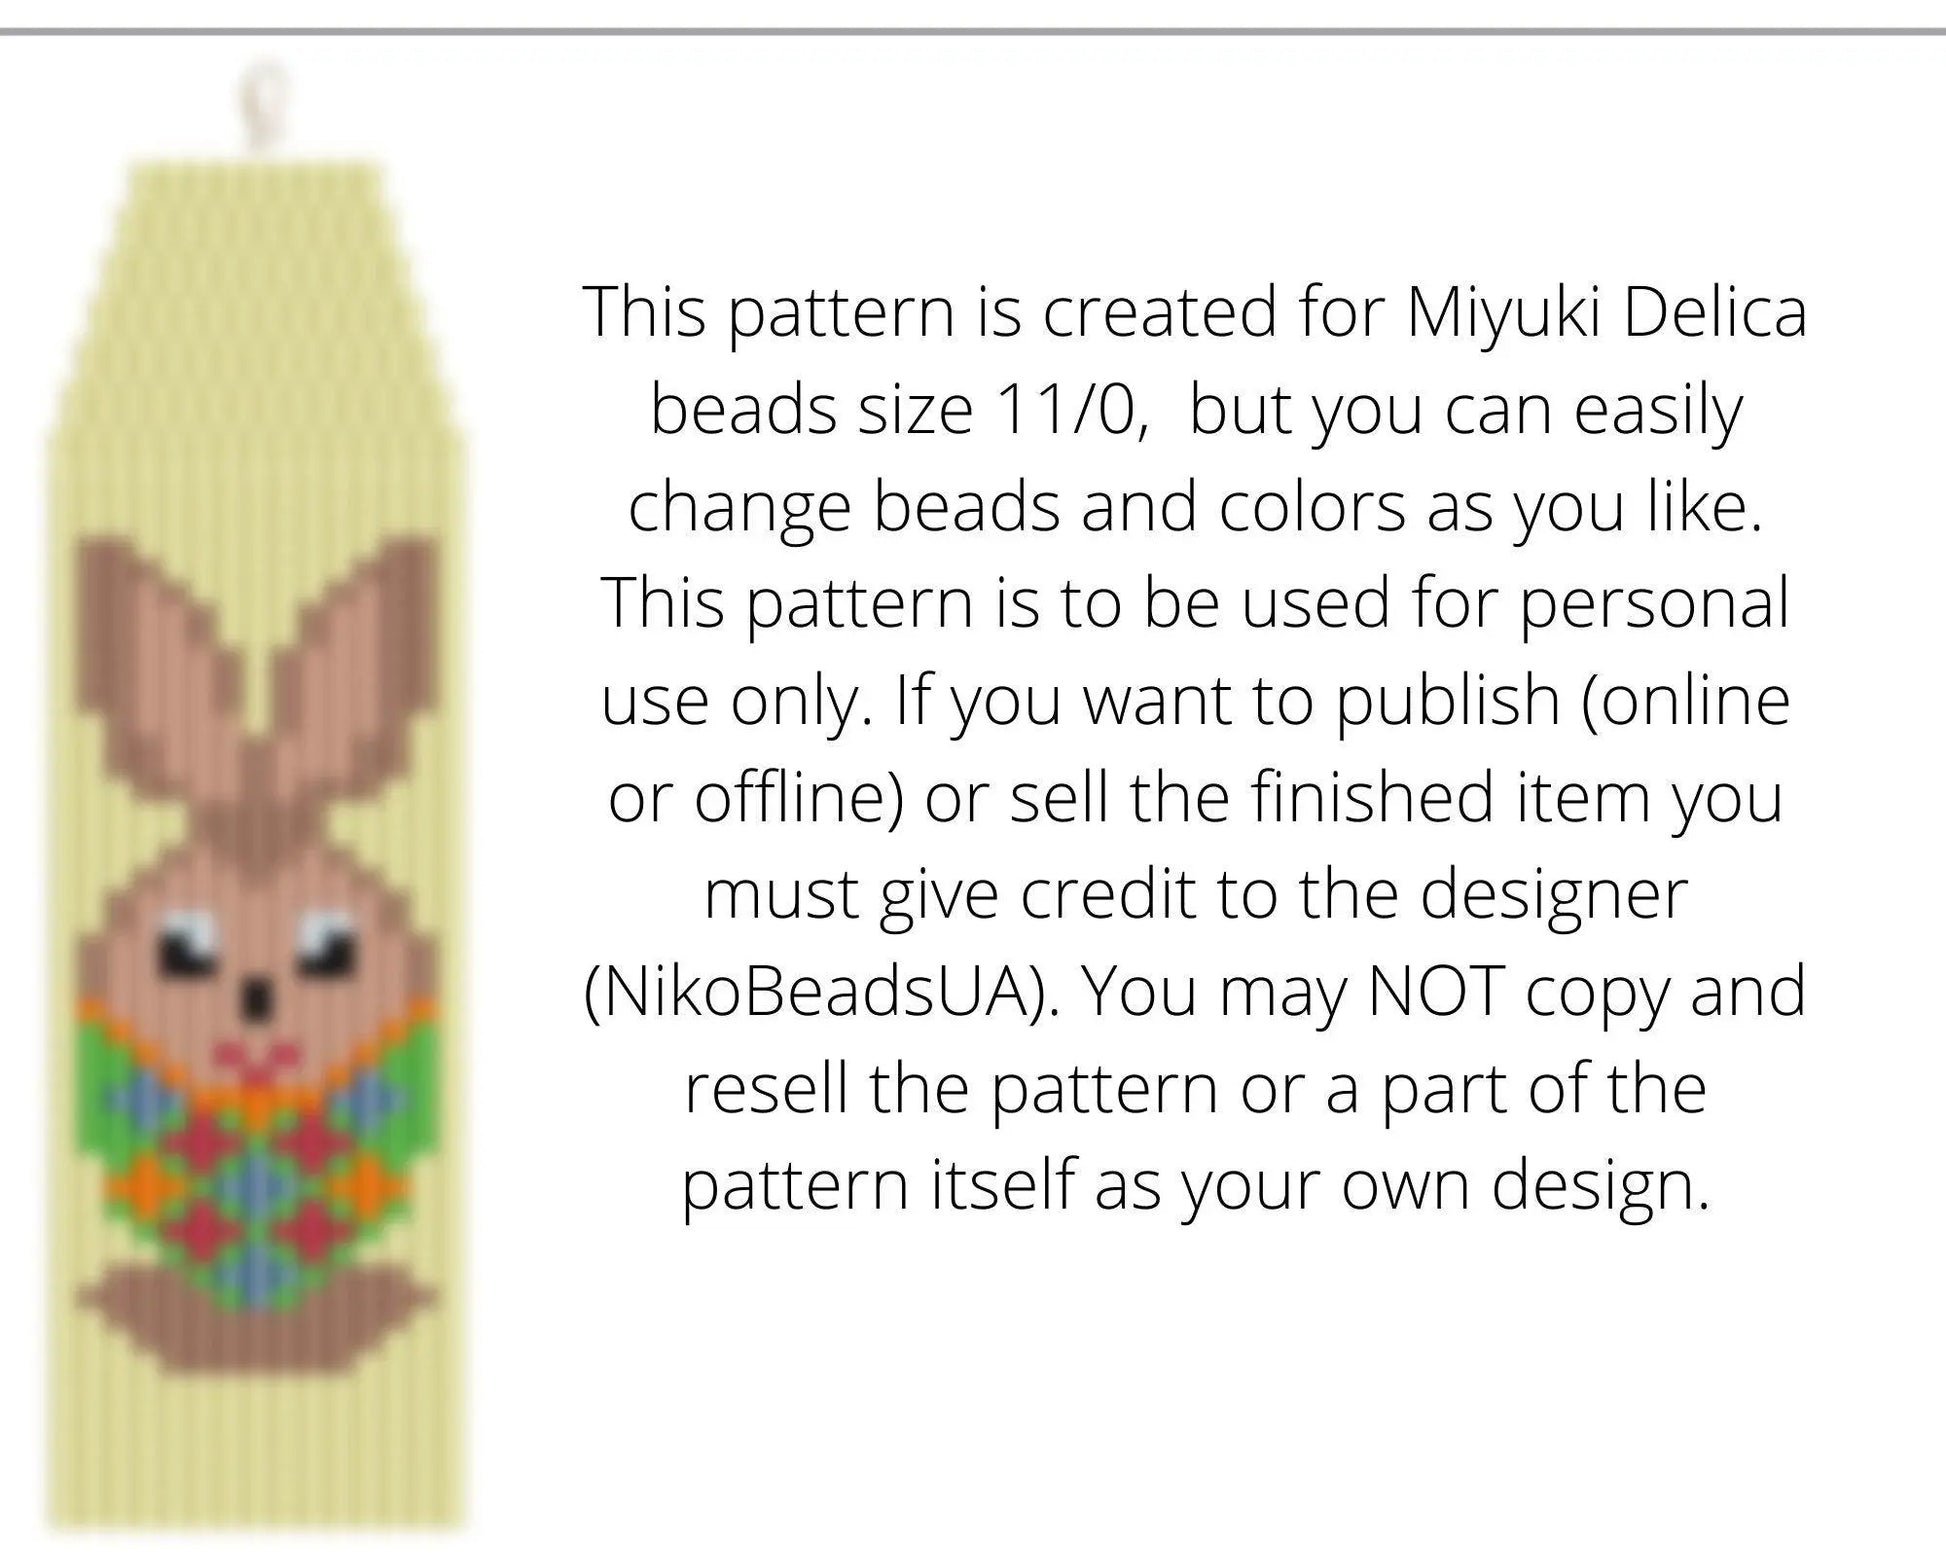 Easter Bunny Brick Stitch pattern for fringe beaded earrings - NikoBeadsUA